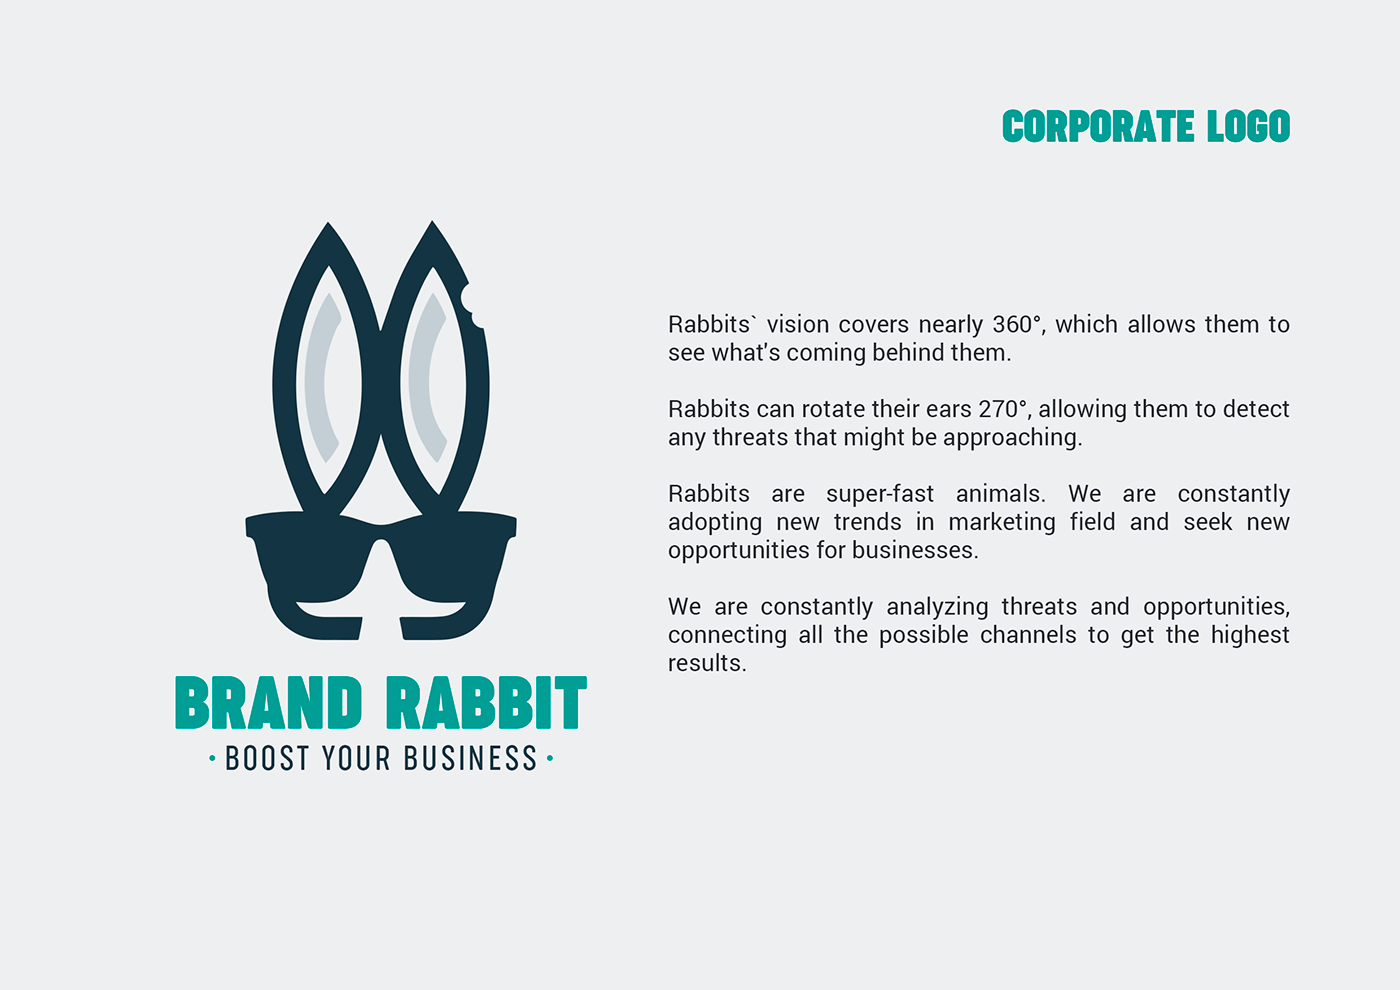 brandbook brand identity design designer graphic design  identity Logo Design business card t-shirt visual identity